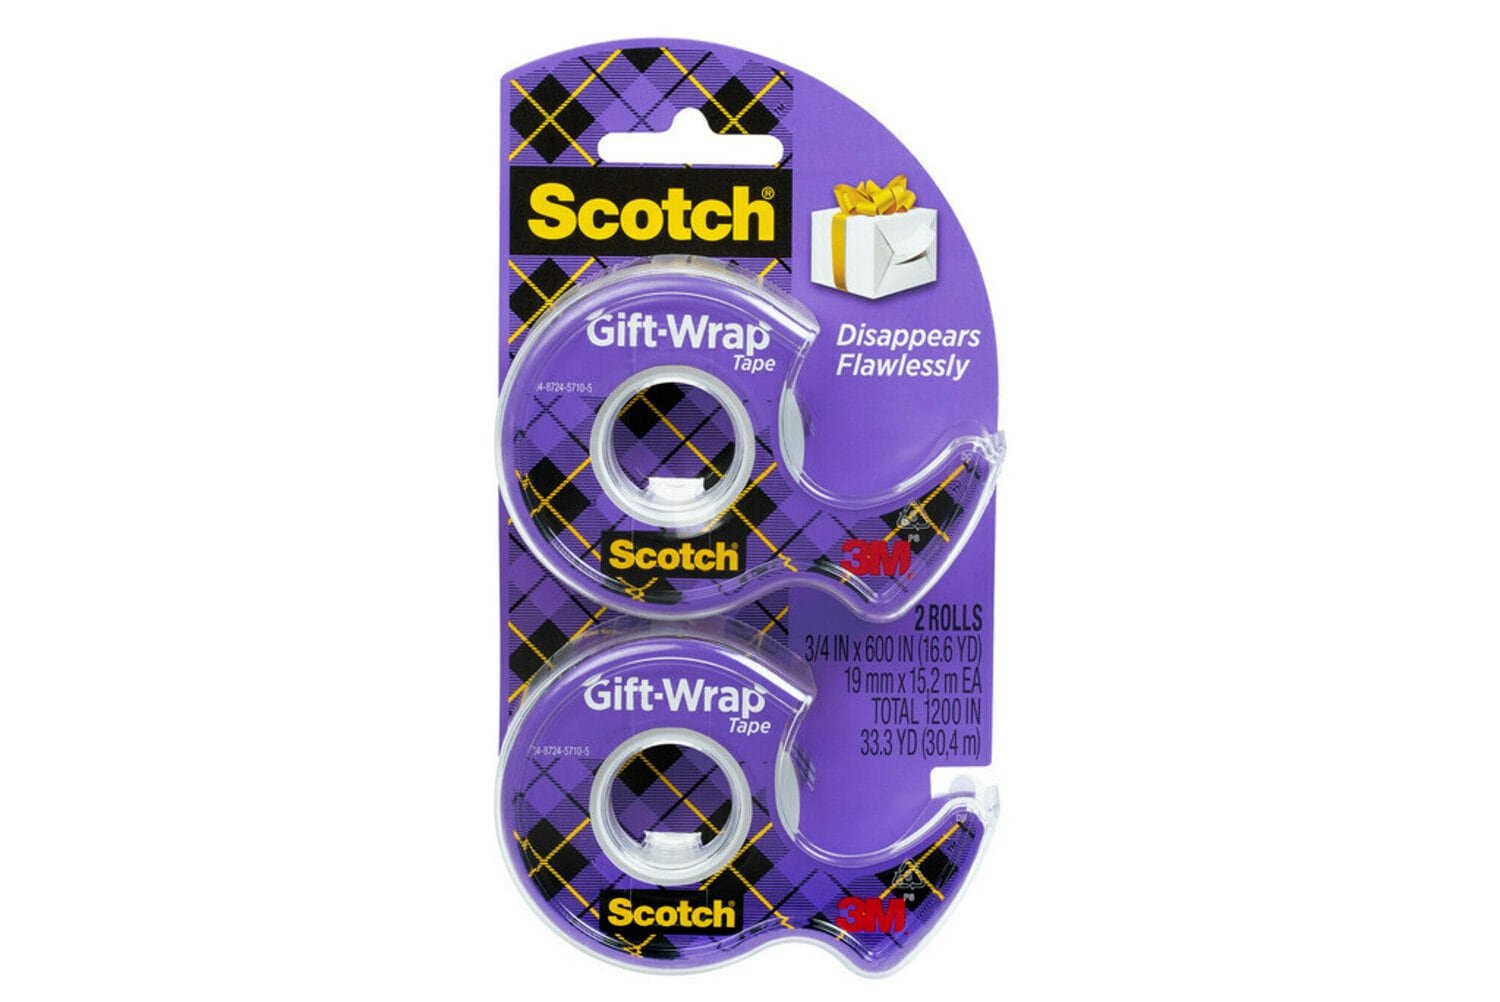 7010371400 - Scotch GiftWrap Tape 15DM-2, 3/4 in x 600 in